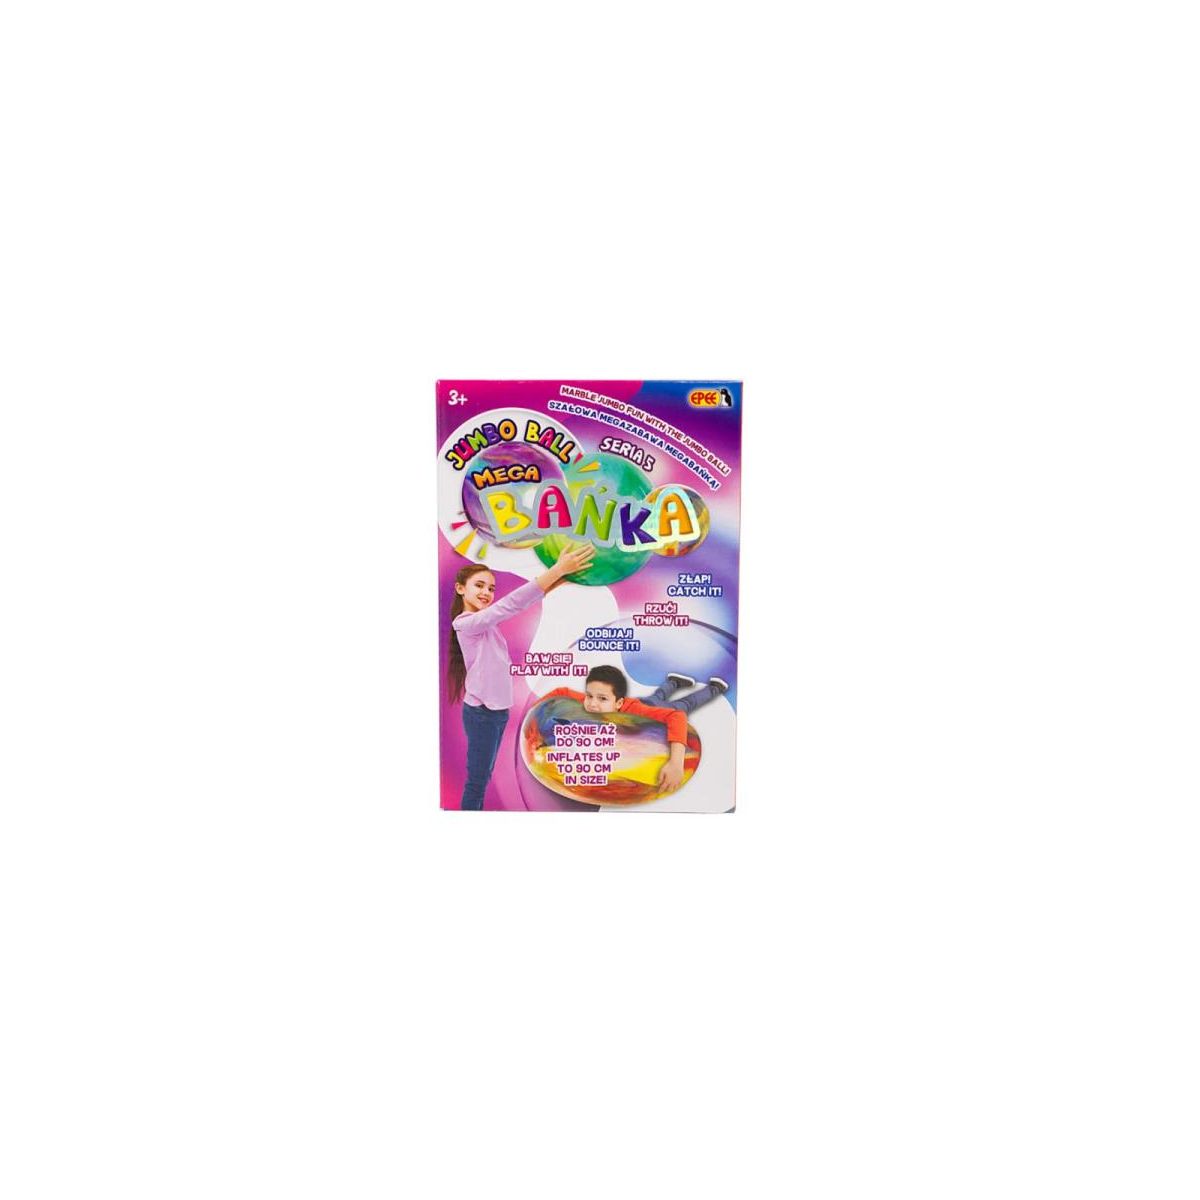 Piłka miękka Epee Mega bańka seria 5, szał kolorów - różowy (EP04137)